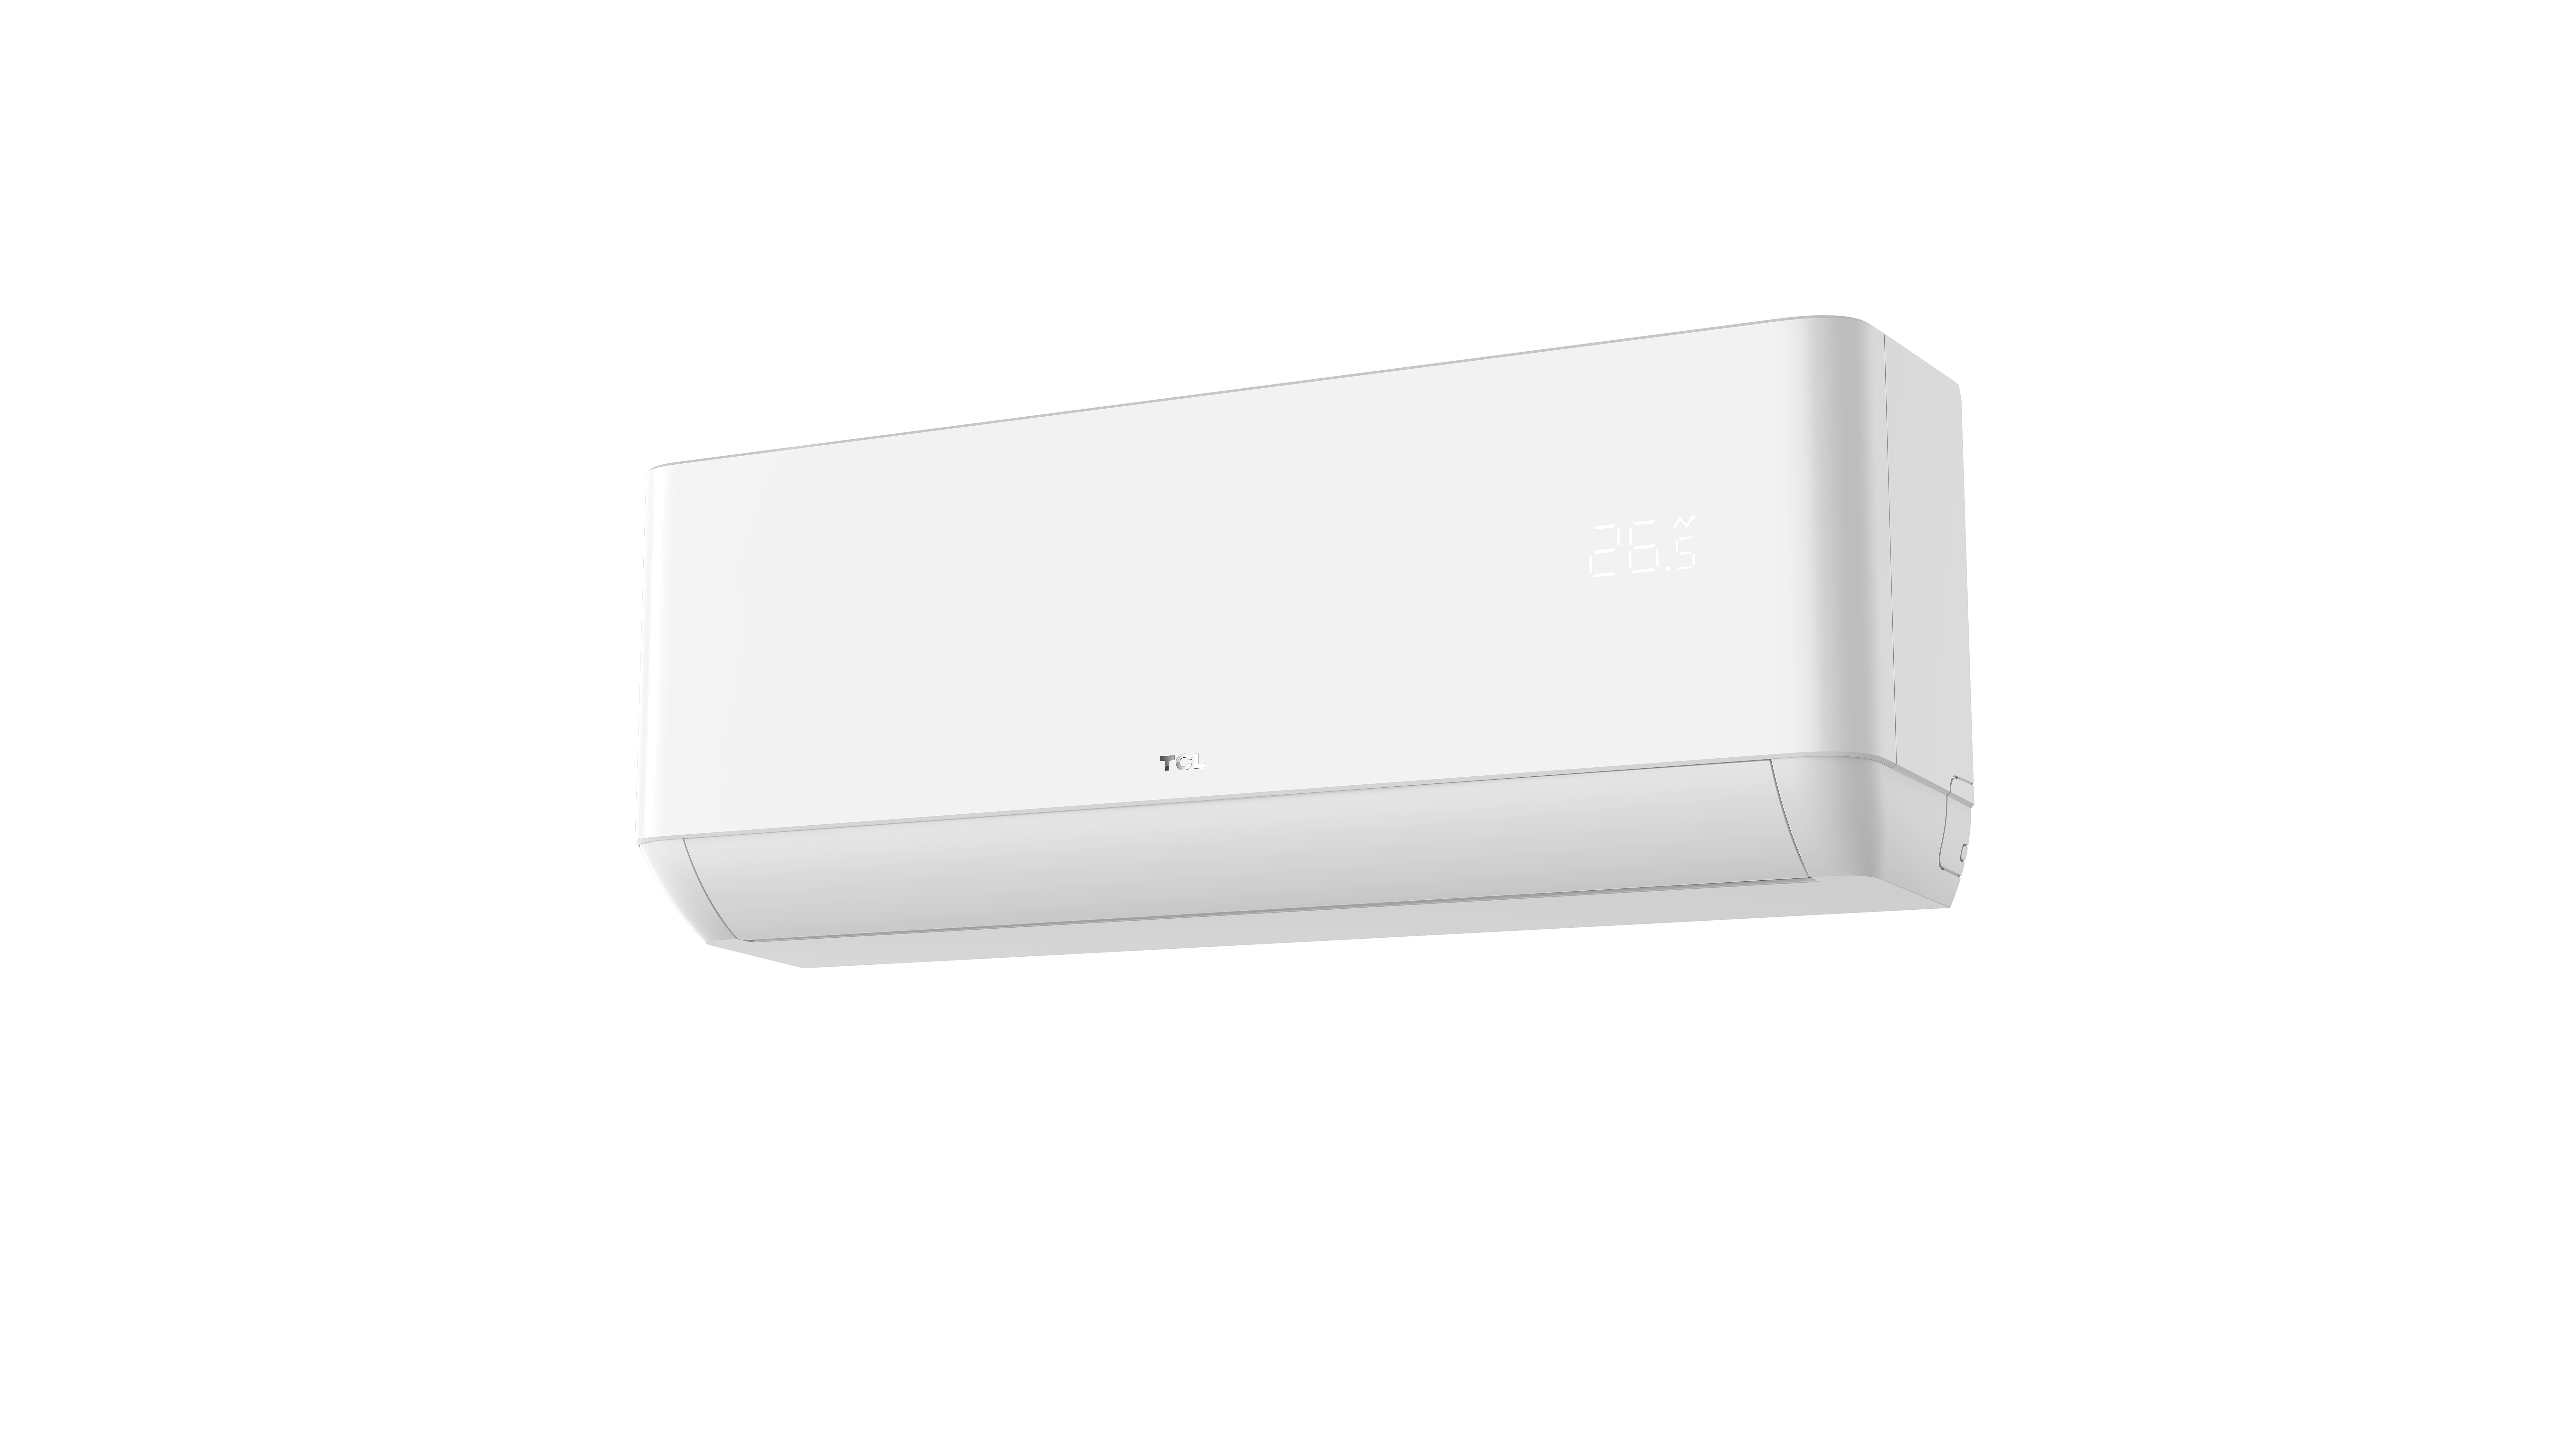 TCL空调 大2匹 三级能效 自清洁 变频冷暖 壁挂式空调 KFR-51GW/AP1a+B3 标准安装